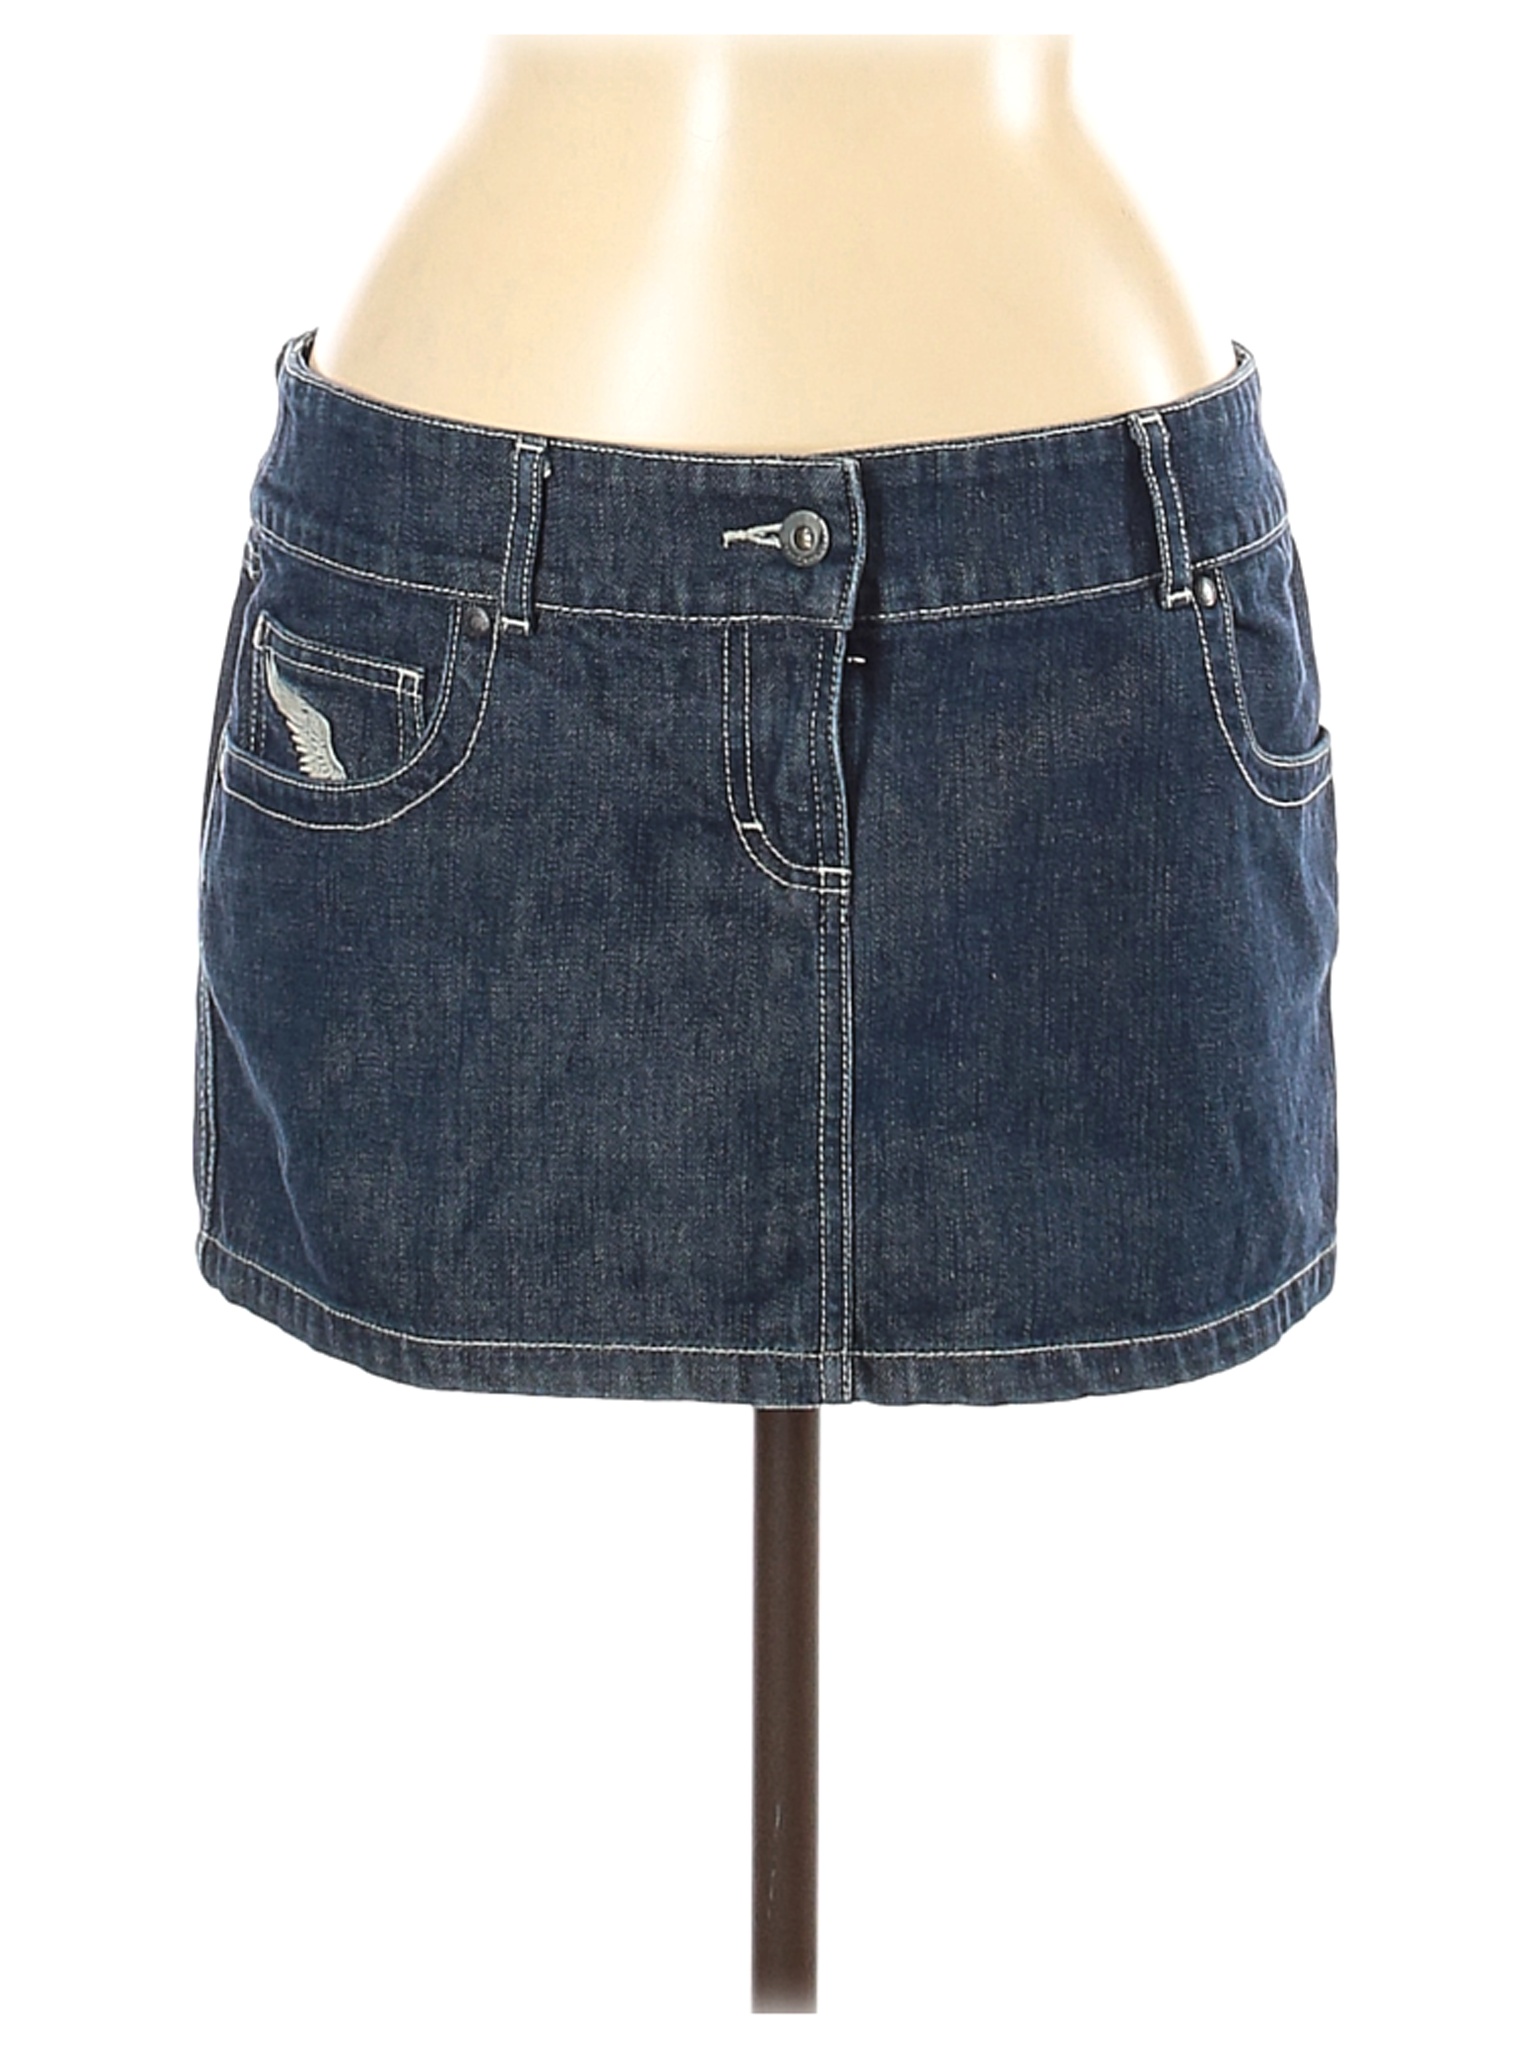 Assorted Brands Women Blue Denim Skirt L | eBay